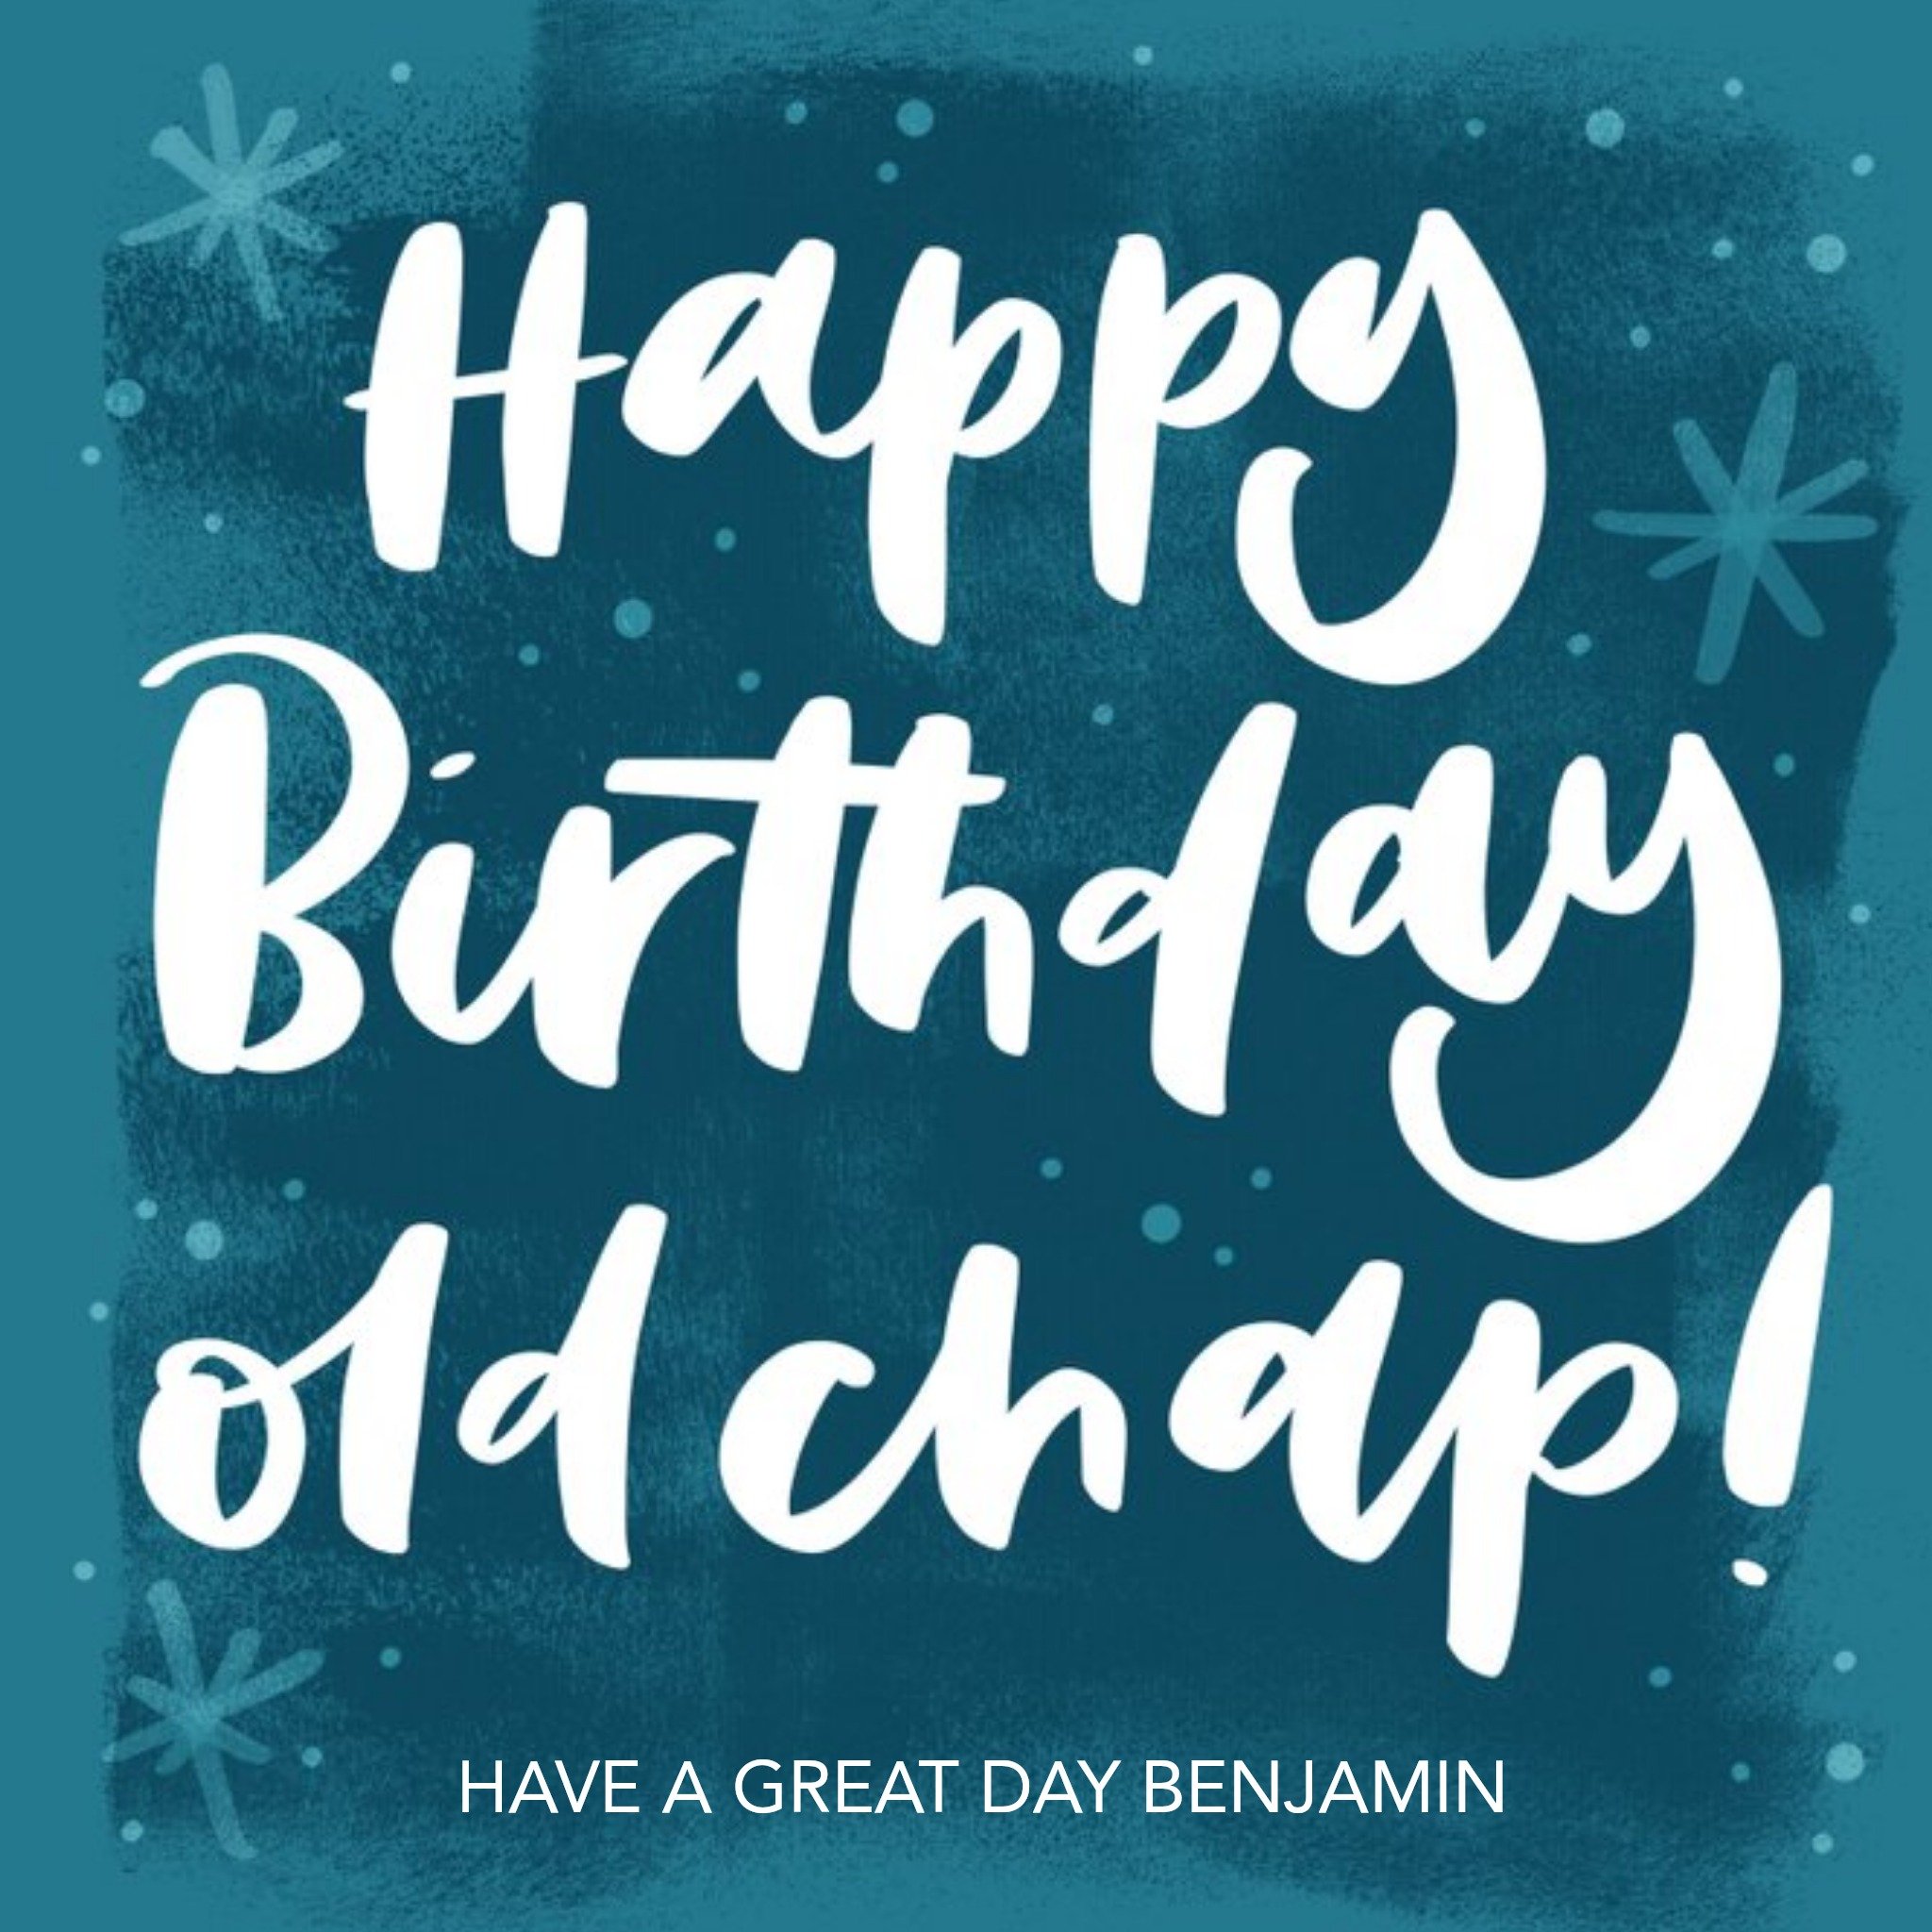 Moonpig Old Chap Birthday Card, Square